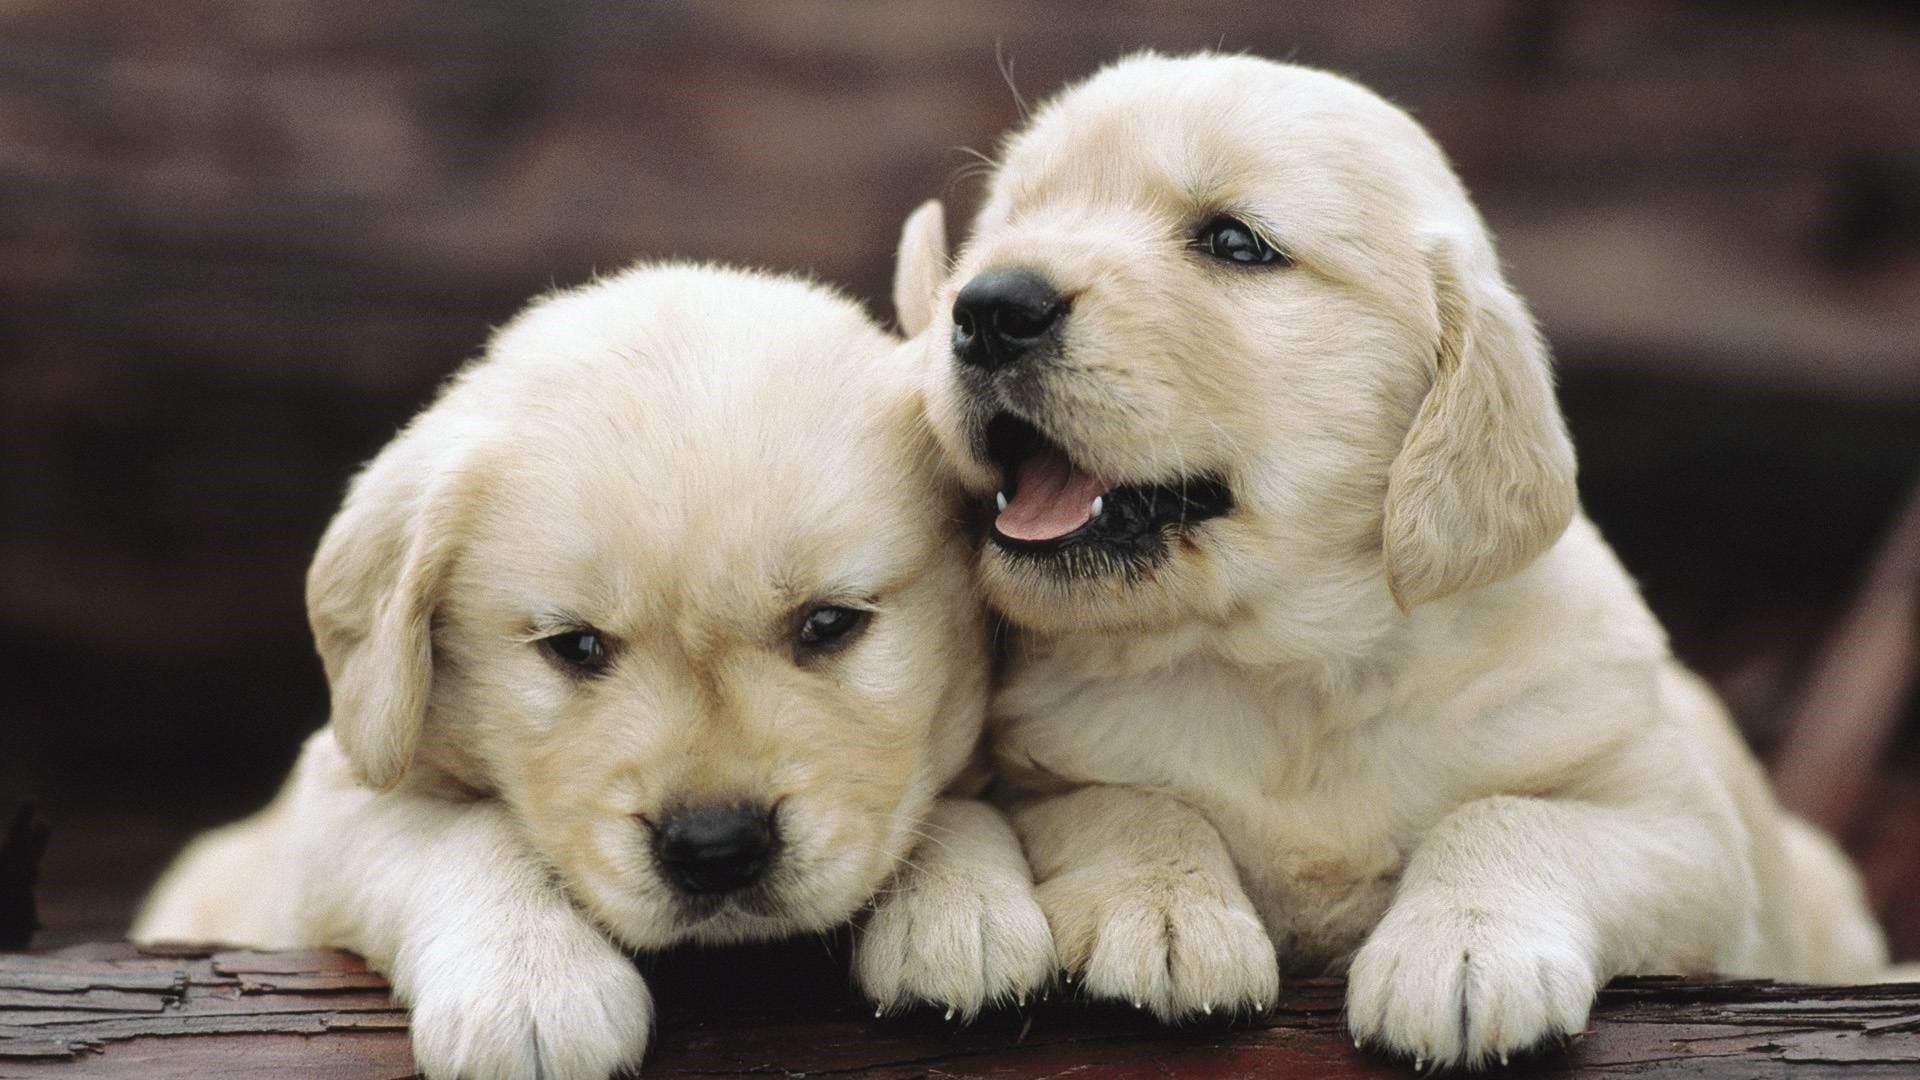 Cute, doggie, dogs, puppies wallpaper. Cute dog wallpaper, Puppy wallpaper, Puppy friends